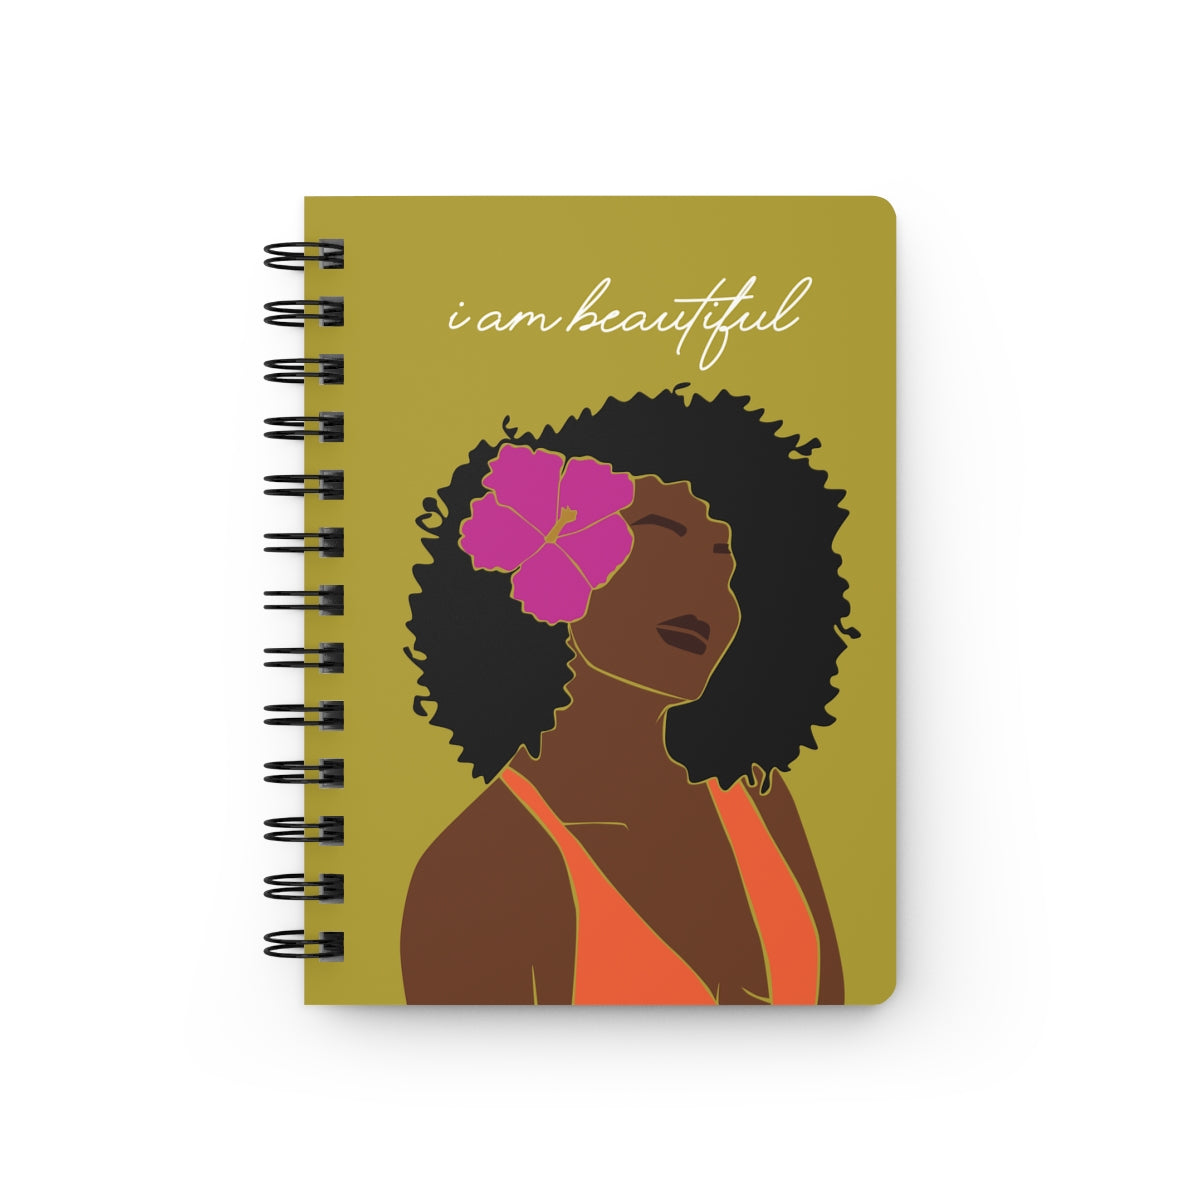 "I am Beautiful" Spiral Bound Journal